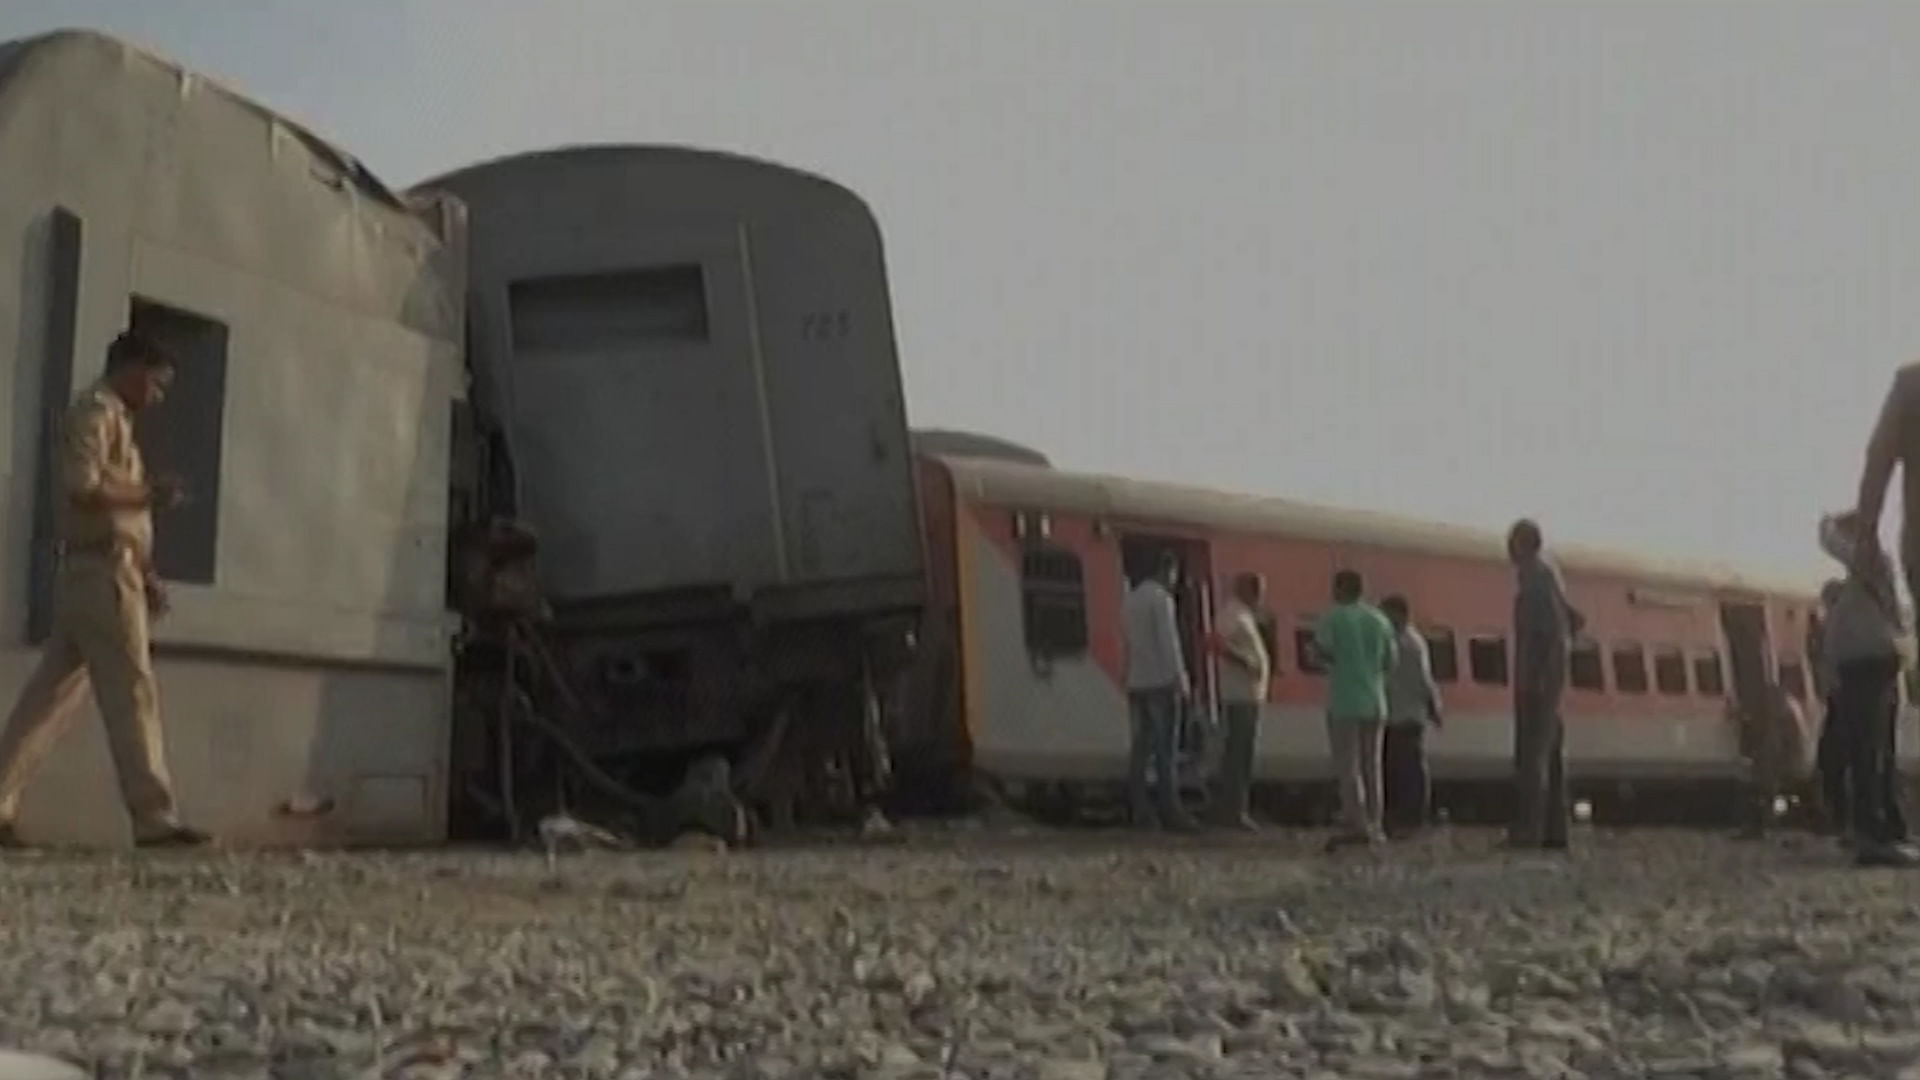 NDRF team at Kaifiyat express train derailment site on Wednesday